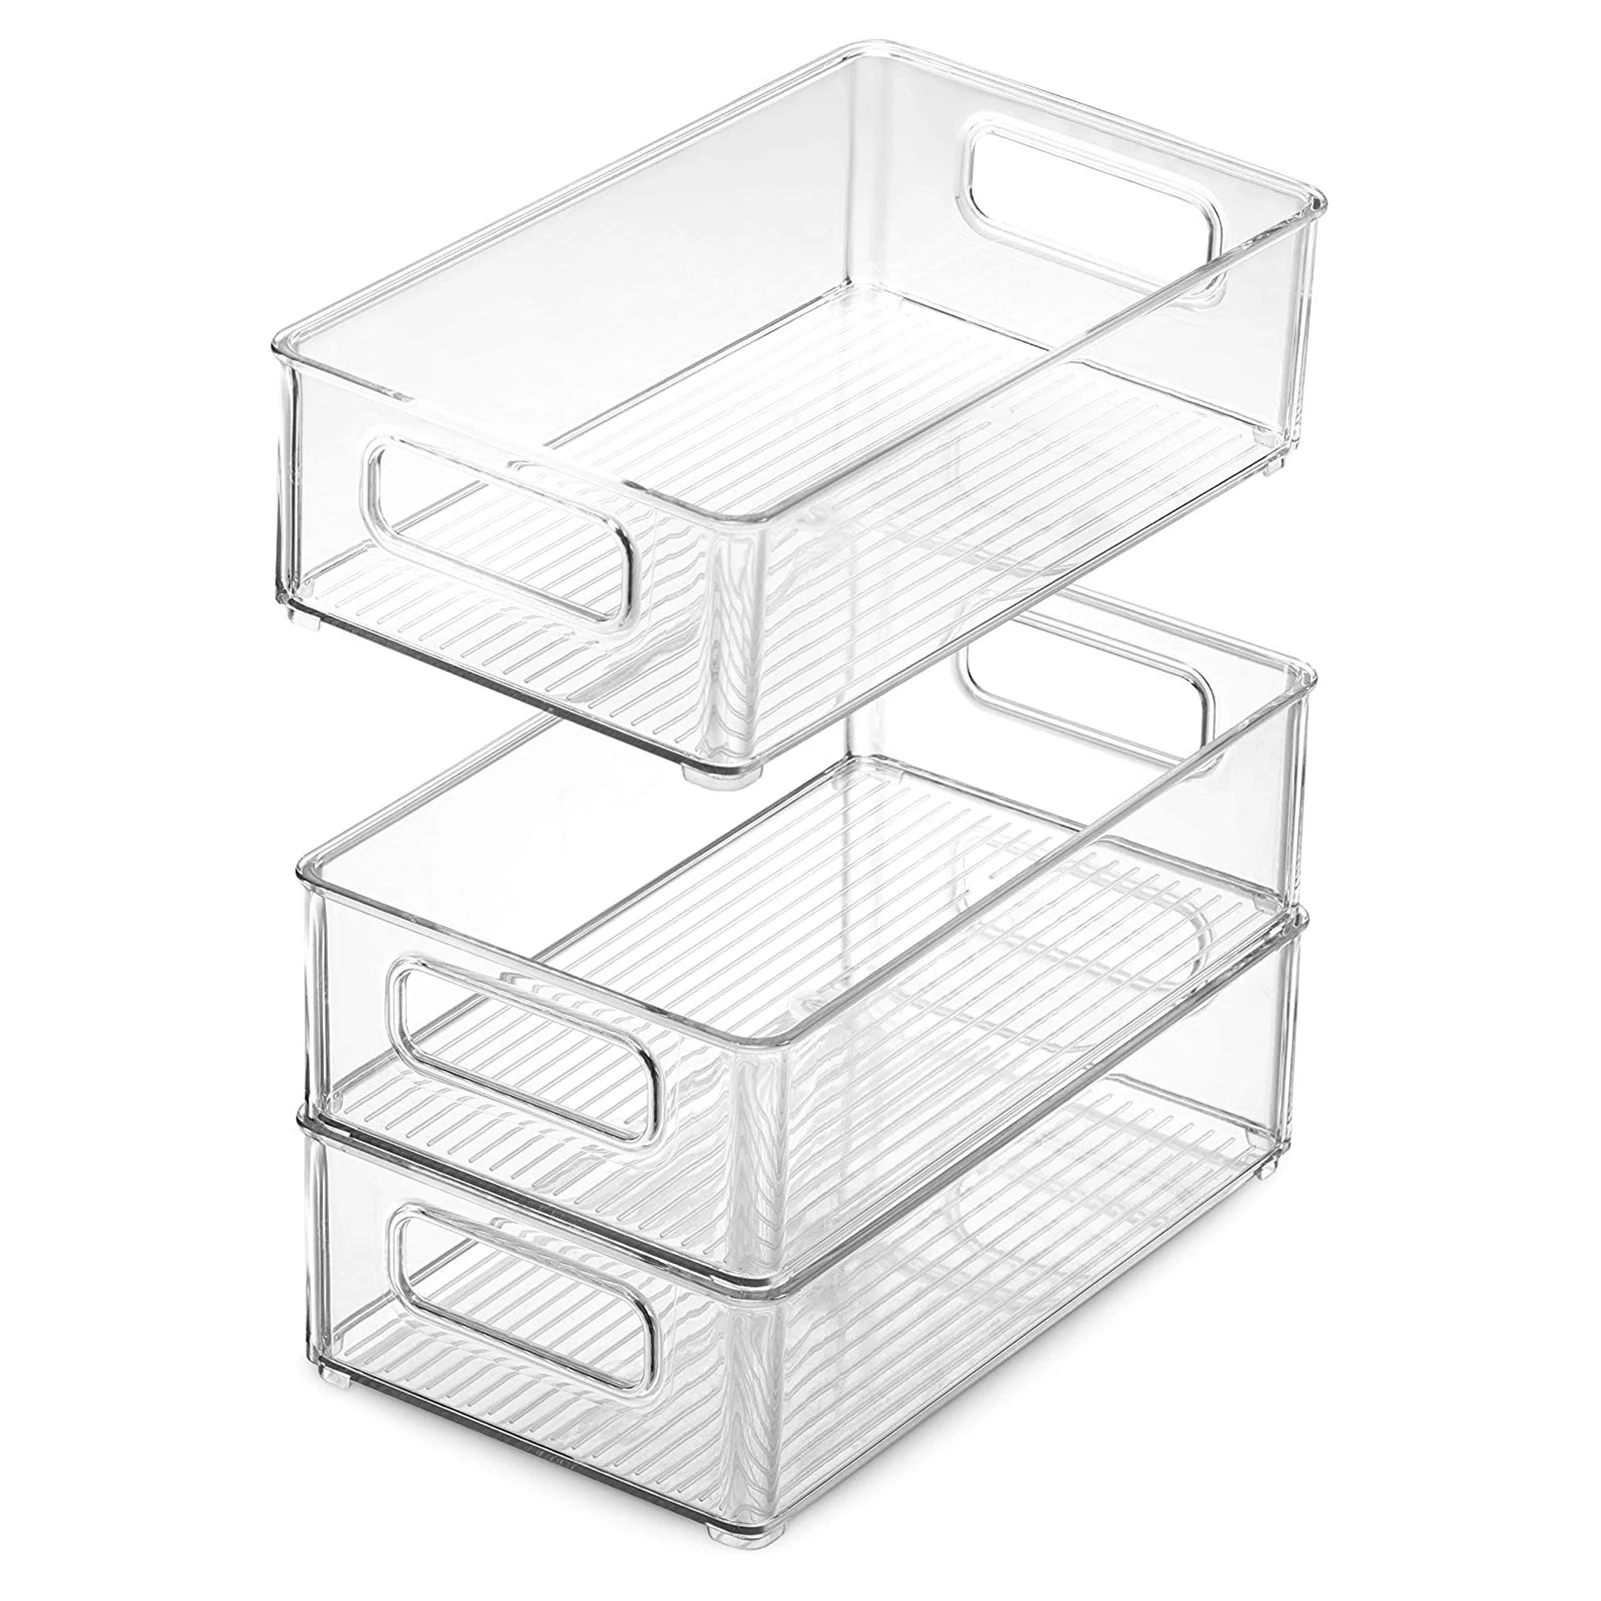 

6pcs Plastic Storage Organizer Space Saving Freezer Organizer for Shelves Countertops Laundry Room B88